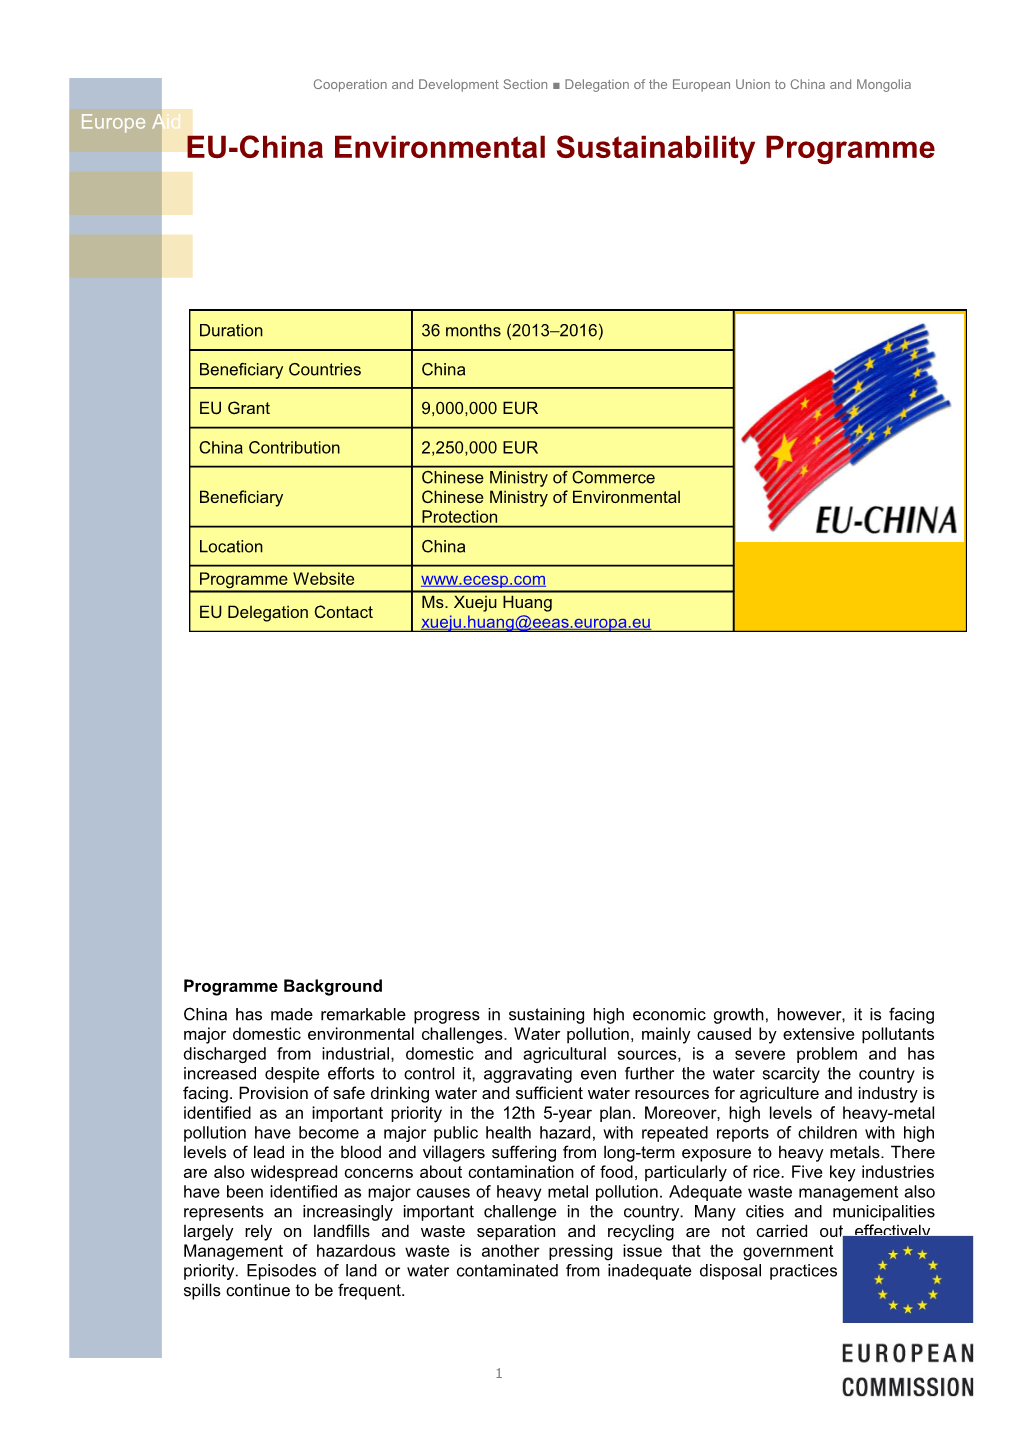 EU-China Environmental Sustainability Programme